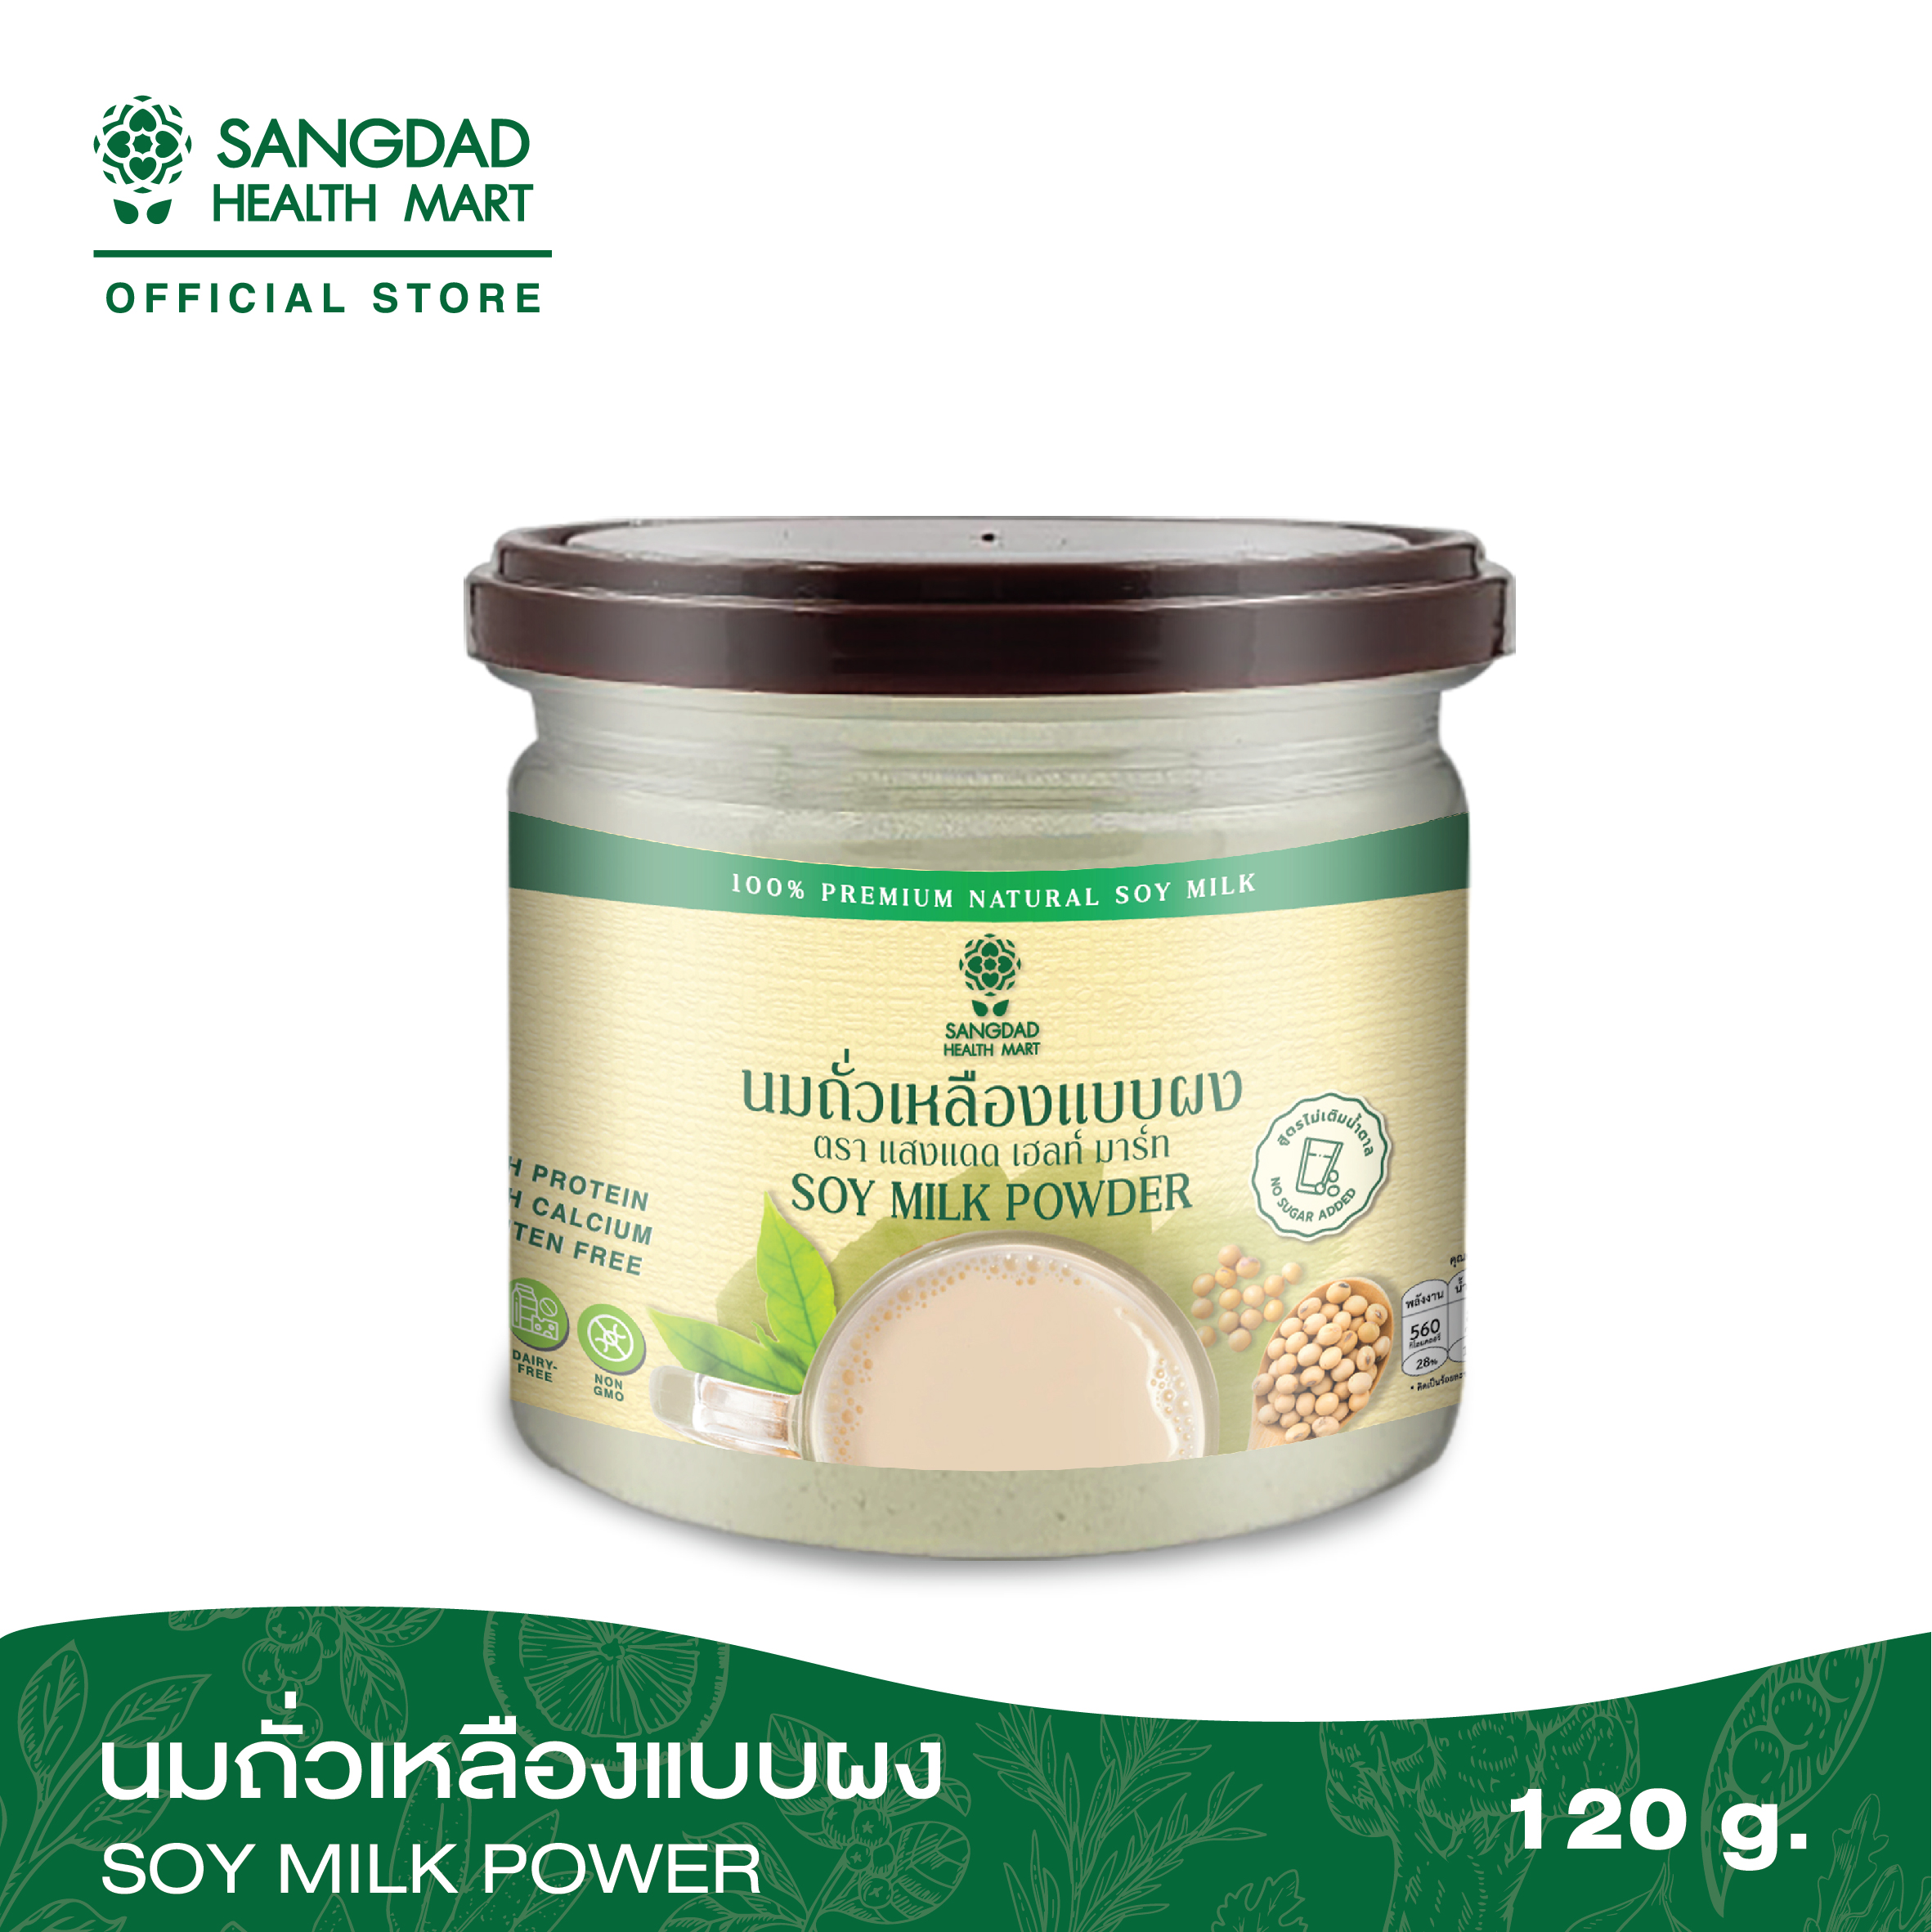 Sangdad Health Mart : นมถั่วเหลือง แบบผง (120 กรัม) By: ป้านิด | สินค้าดีจริง #สุขภาพดีมีไว้แบ่งปัน